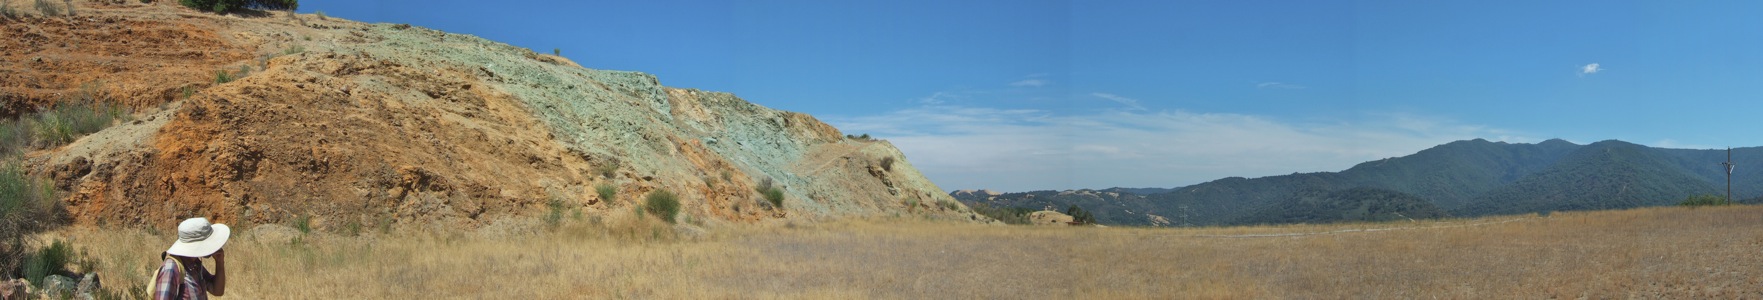 Mine Hill Quarry Almaden Quicksilver - 7/2012